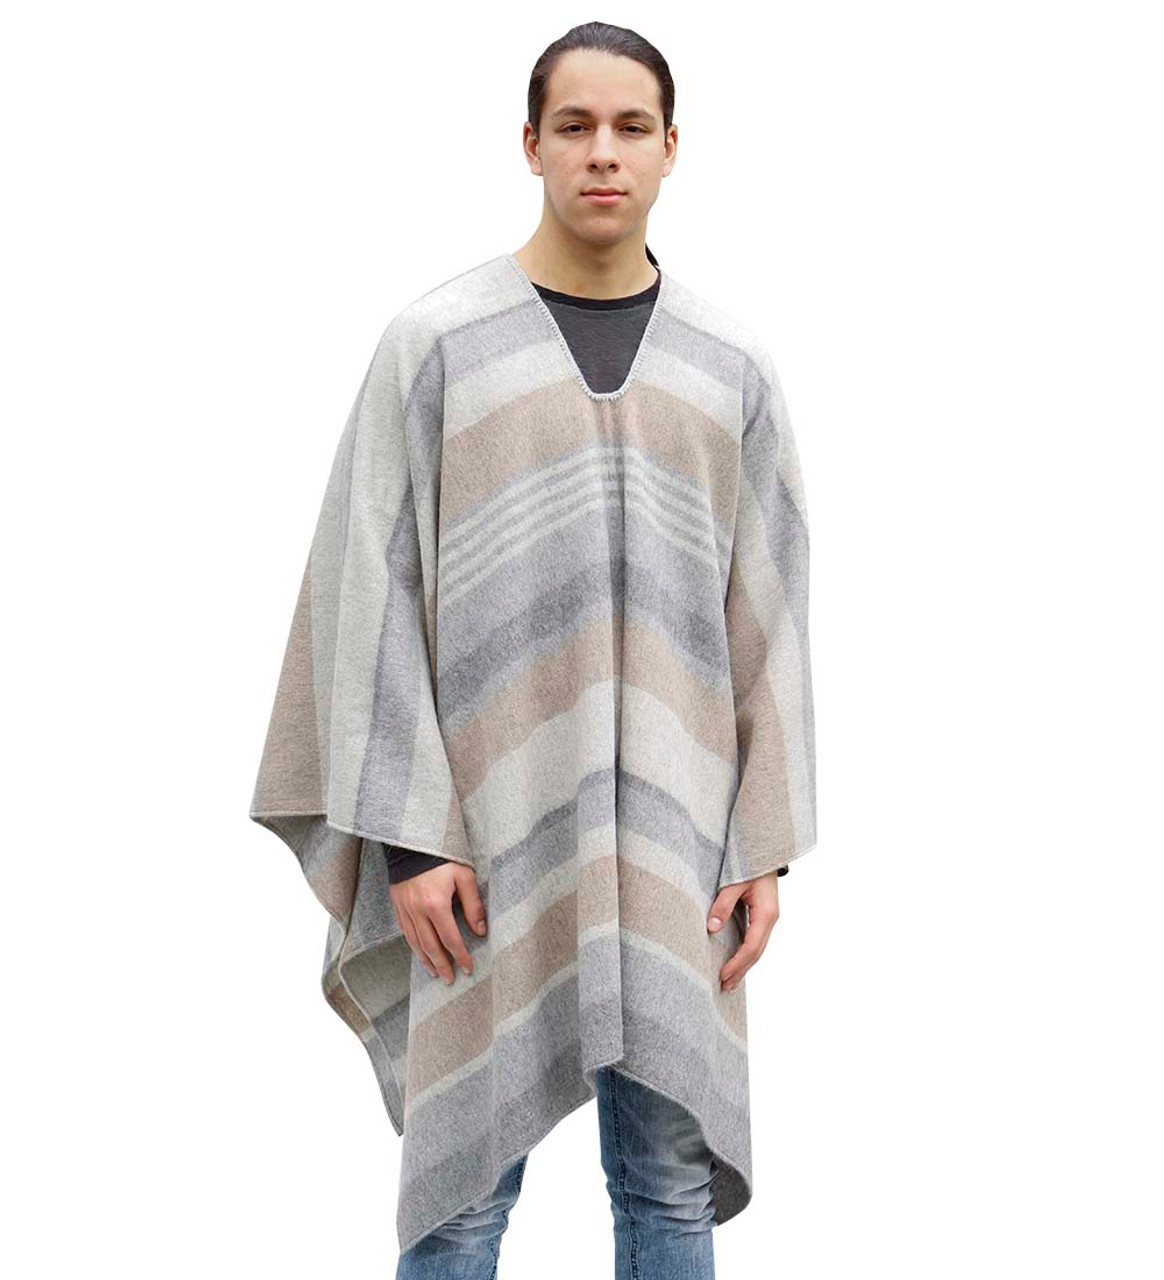 Thick Alpaca Wool Poncho For Women Men Unisex